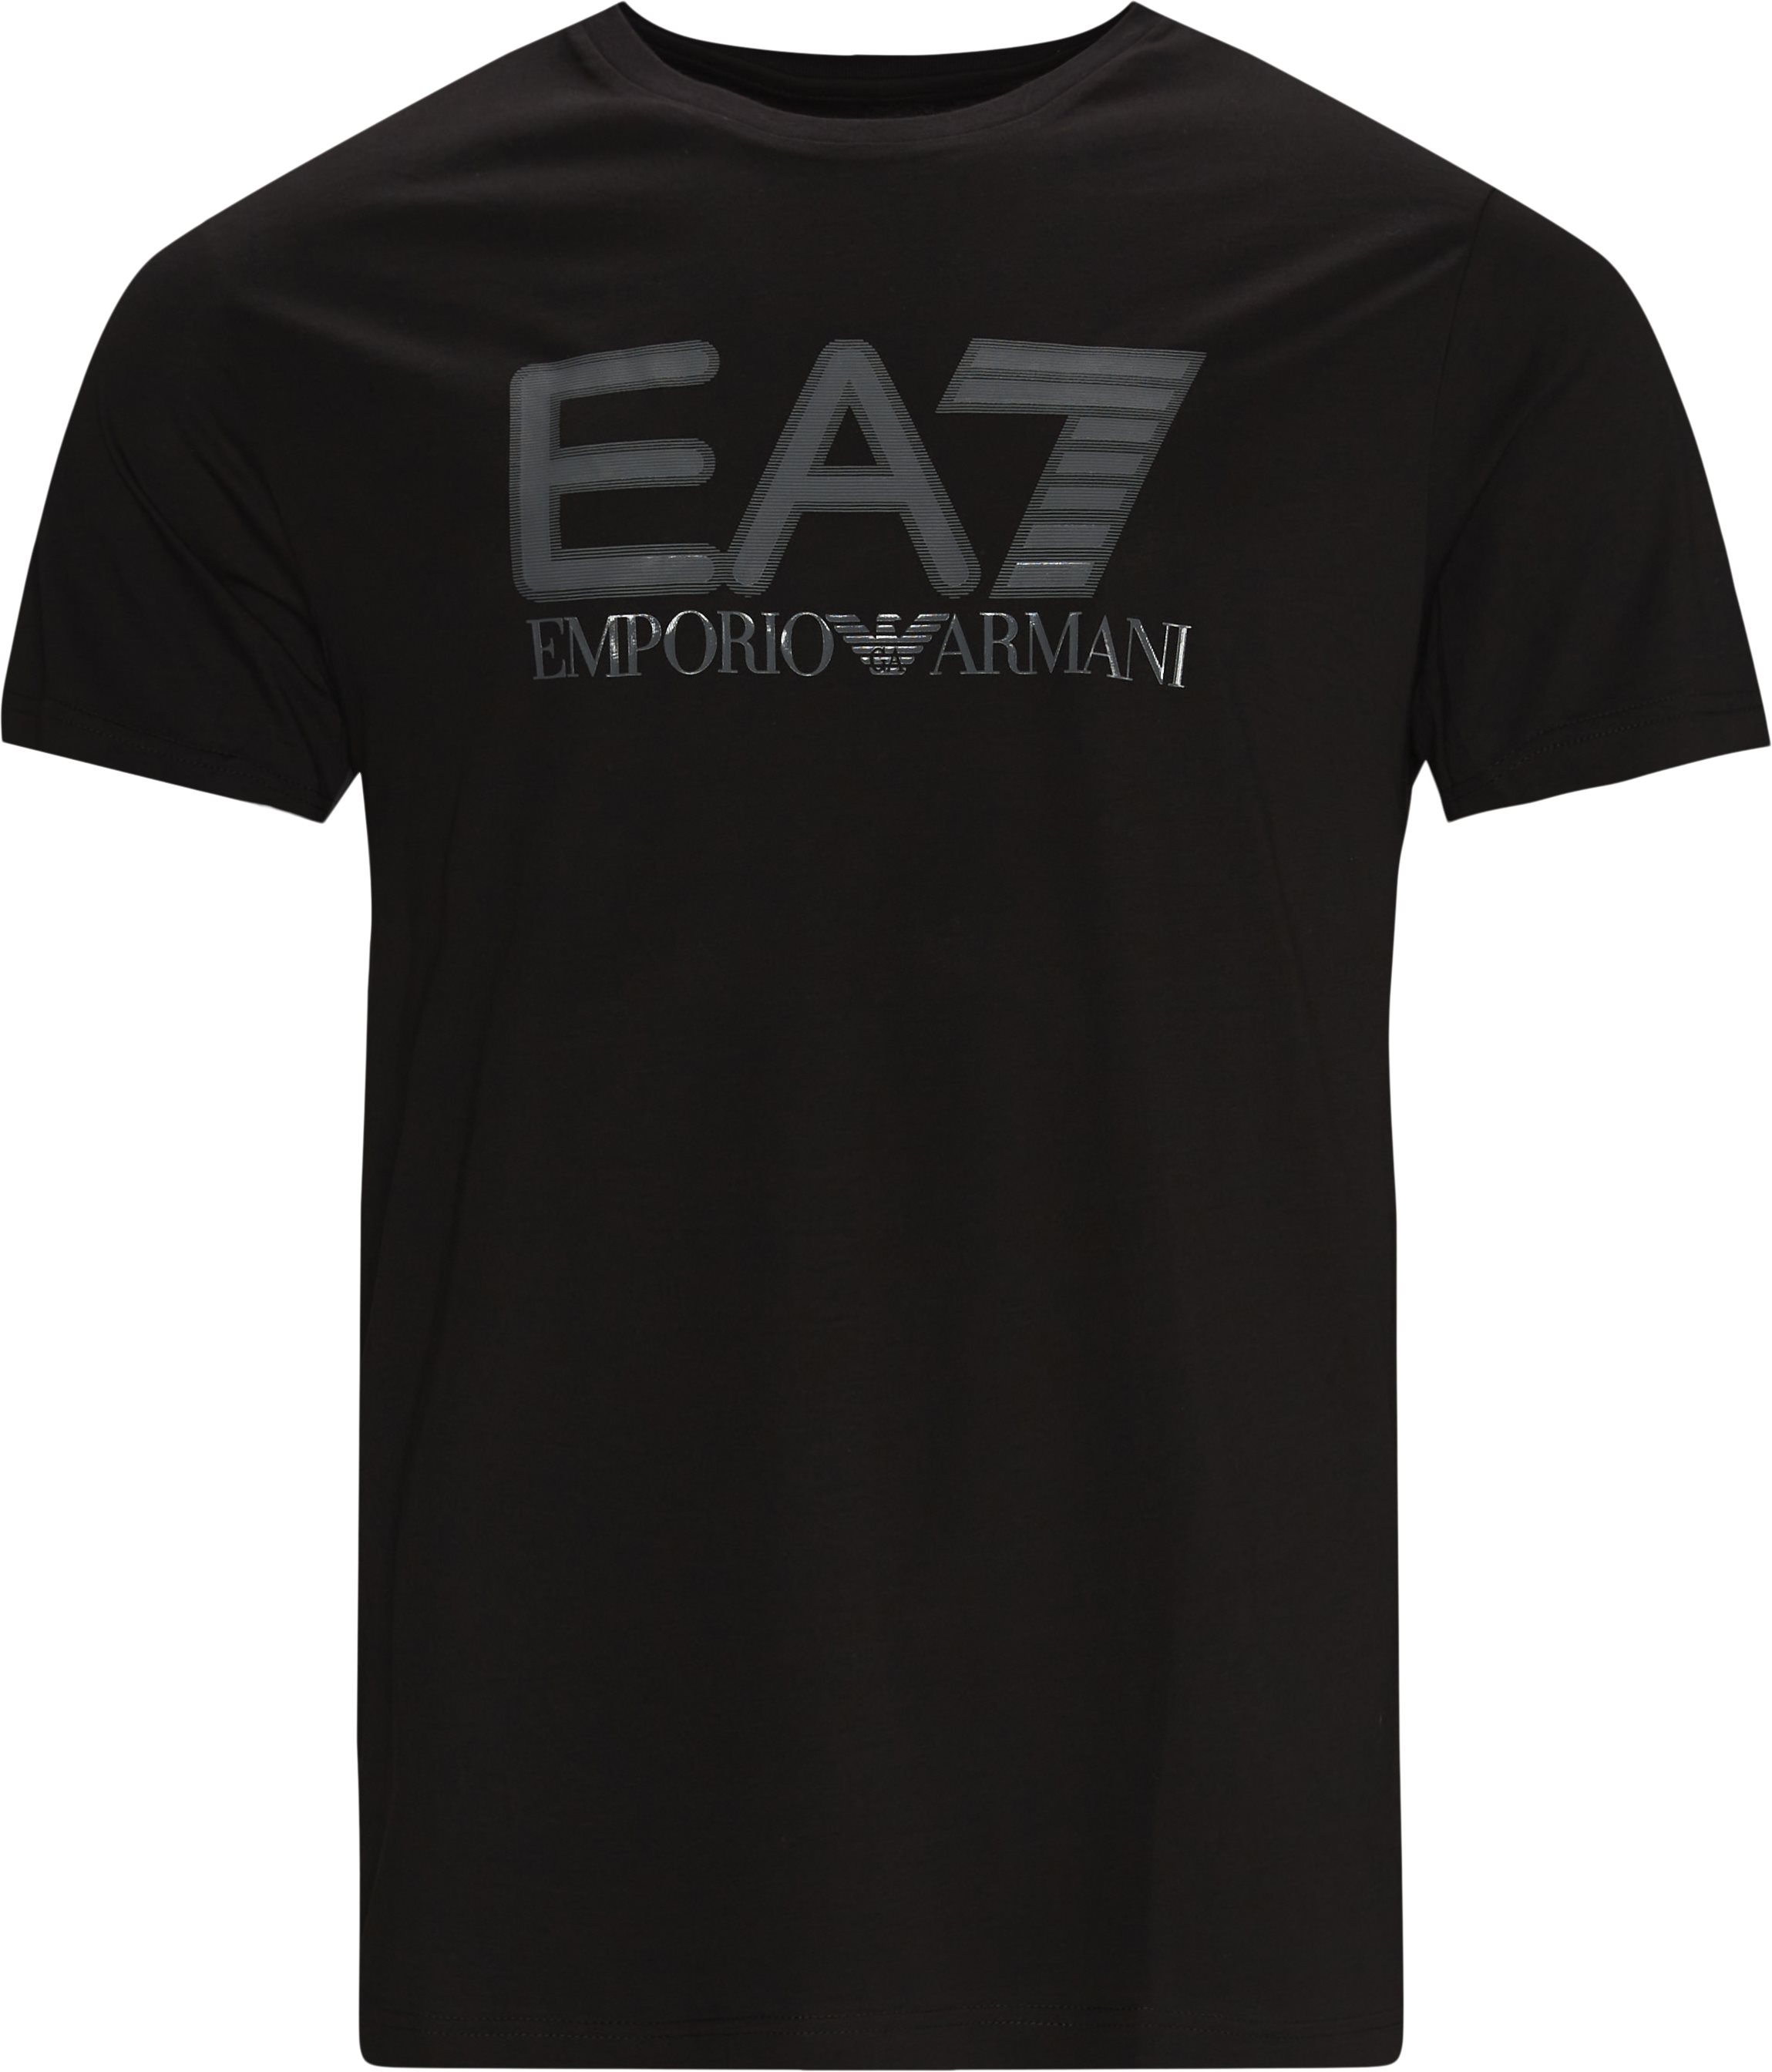 PJM9Z Logo T-shirt - T-shirts - Regular fit - Black